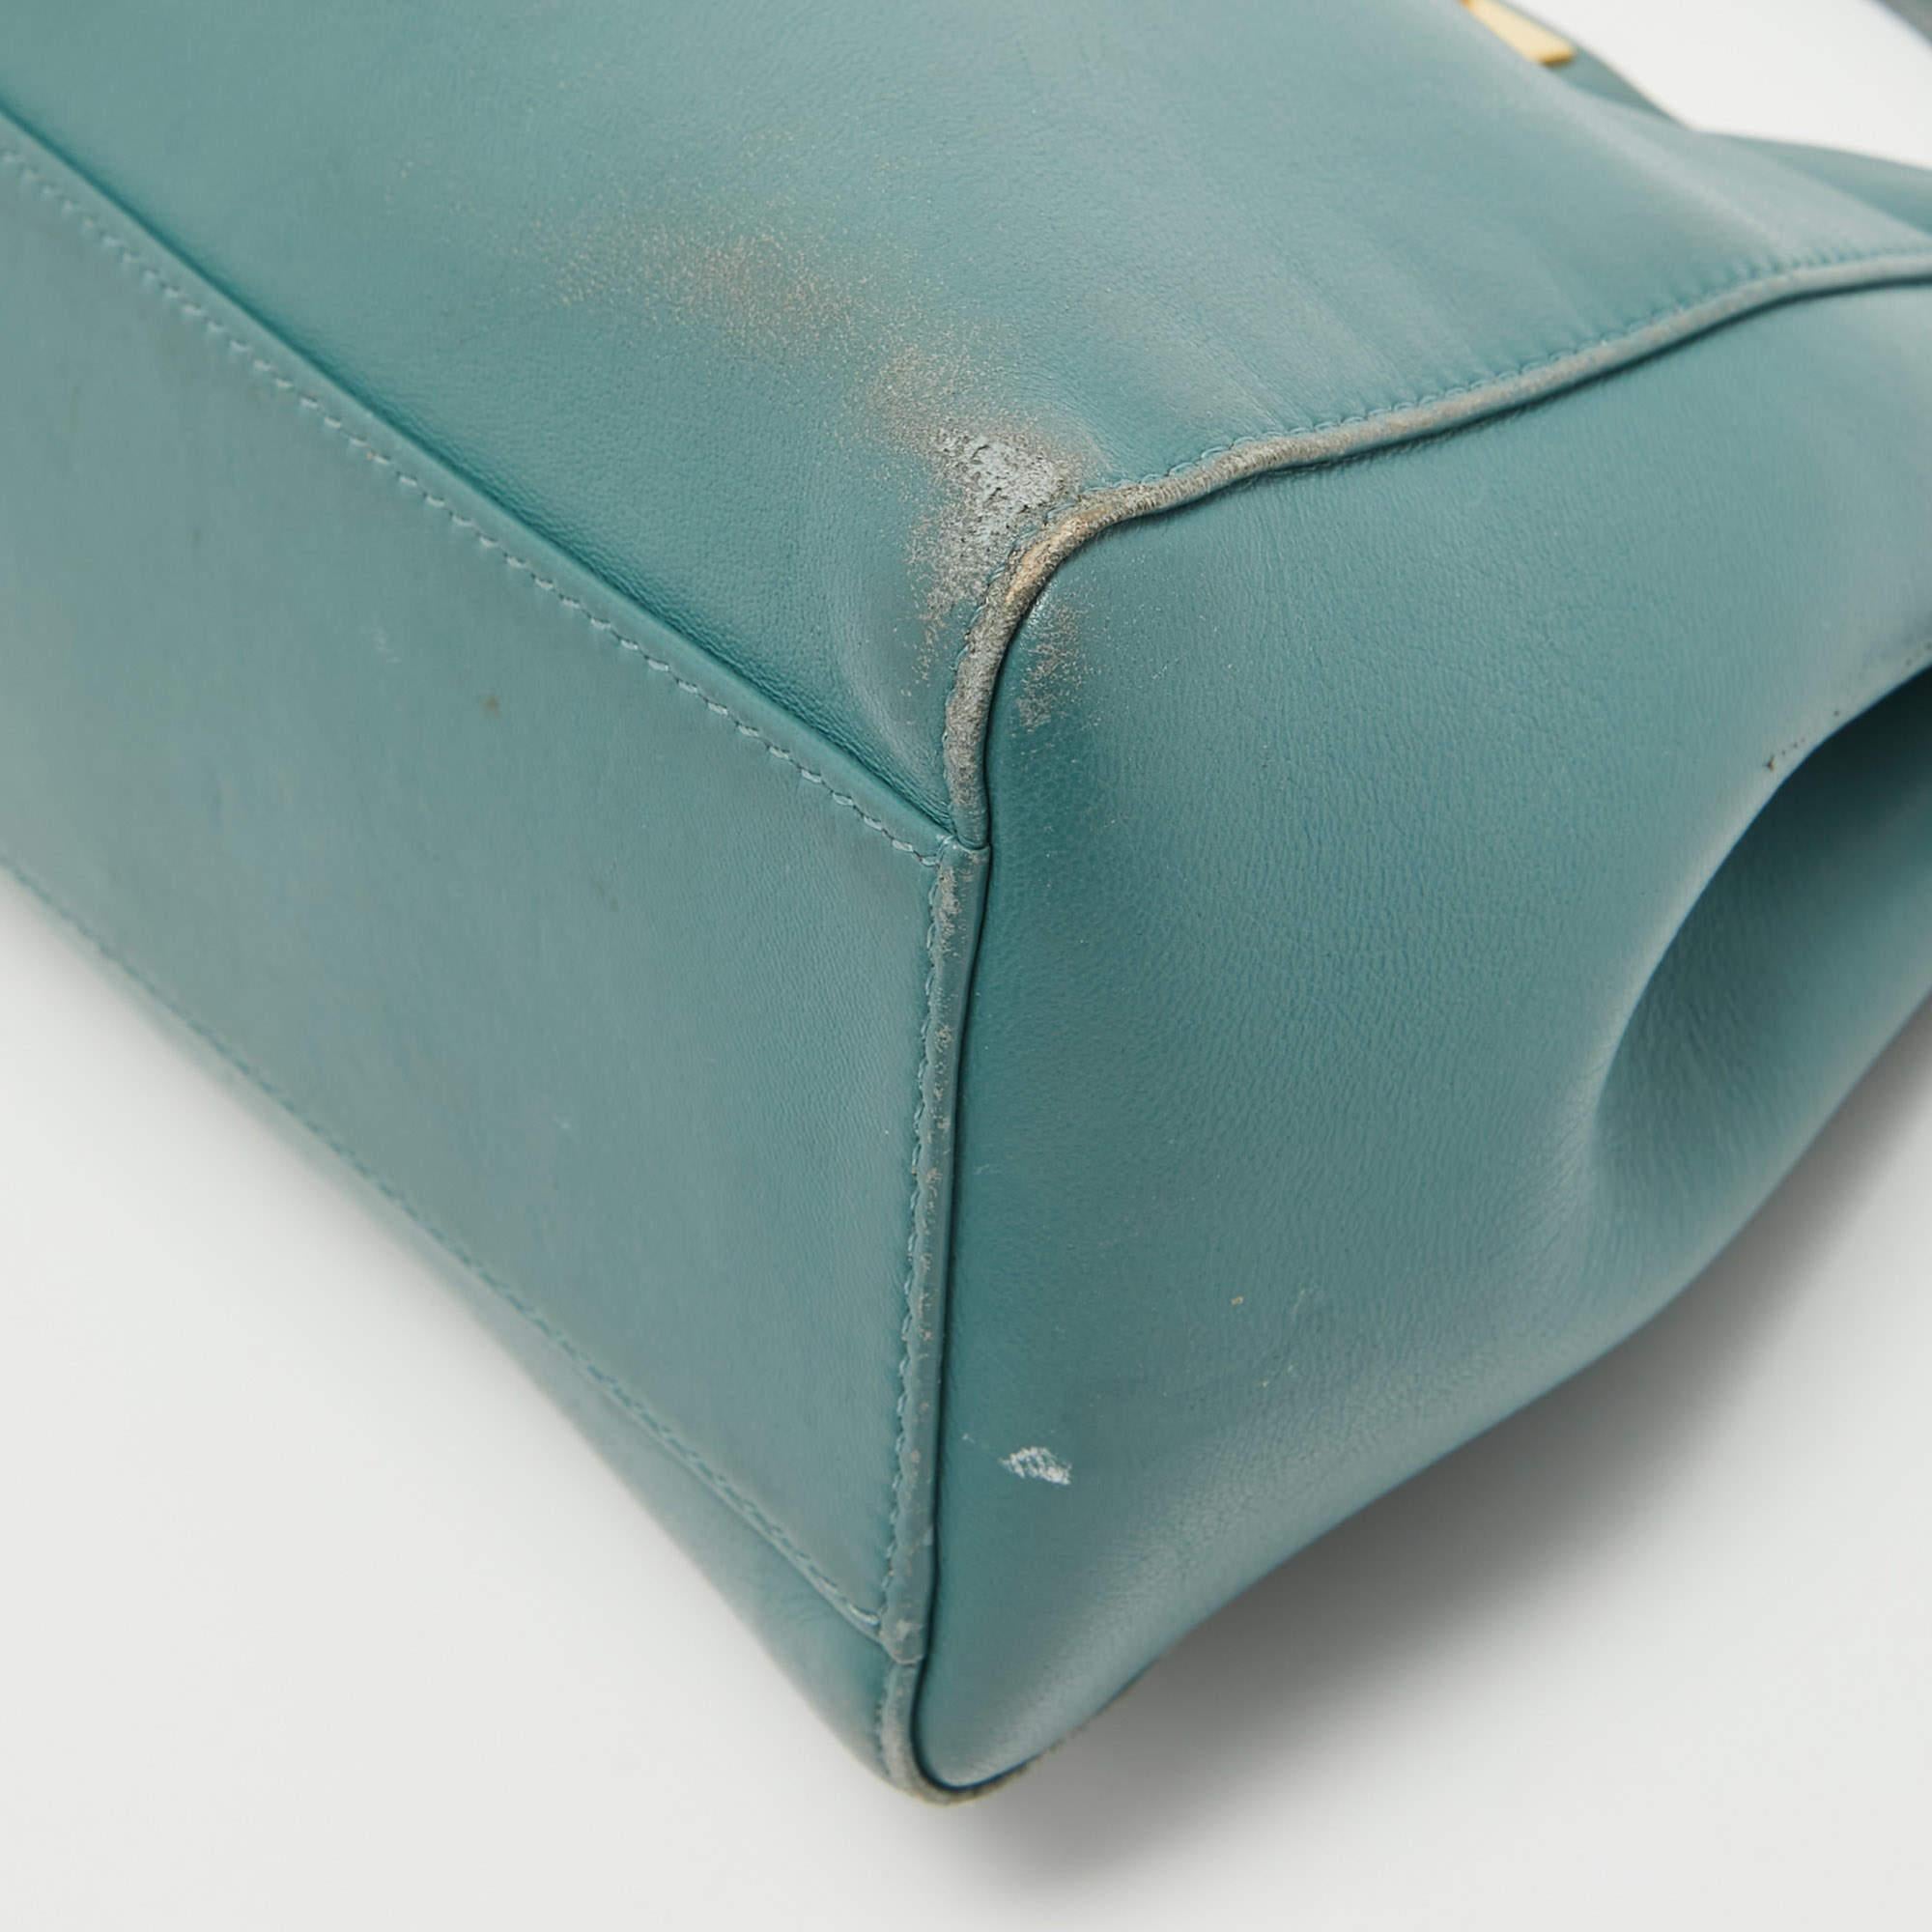 Fendi Teal Blue Leather Mini Peekaboo Top Handle Bag For Sale 4